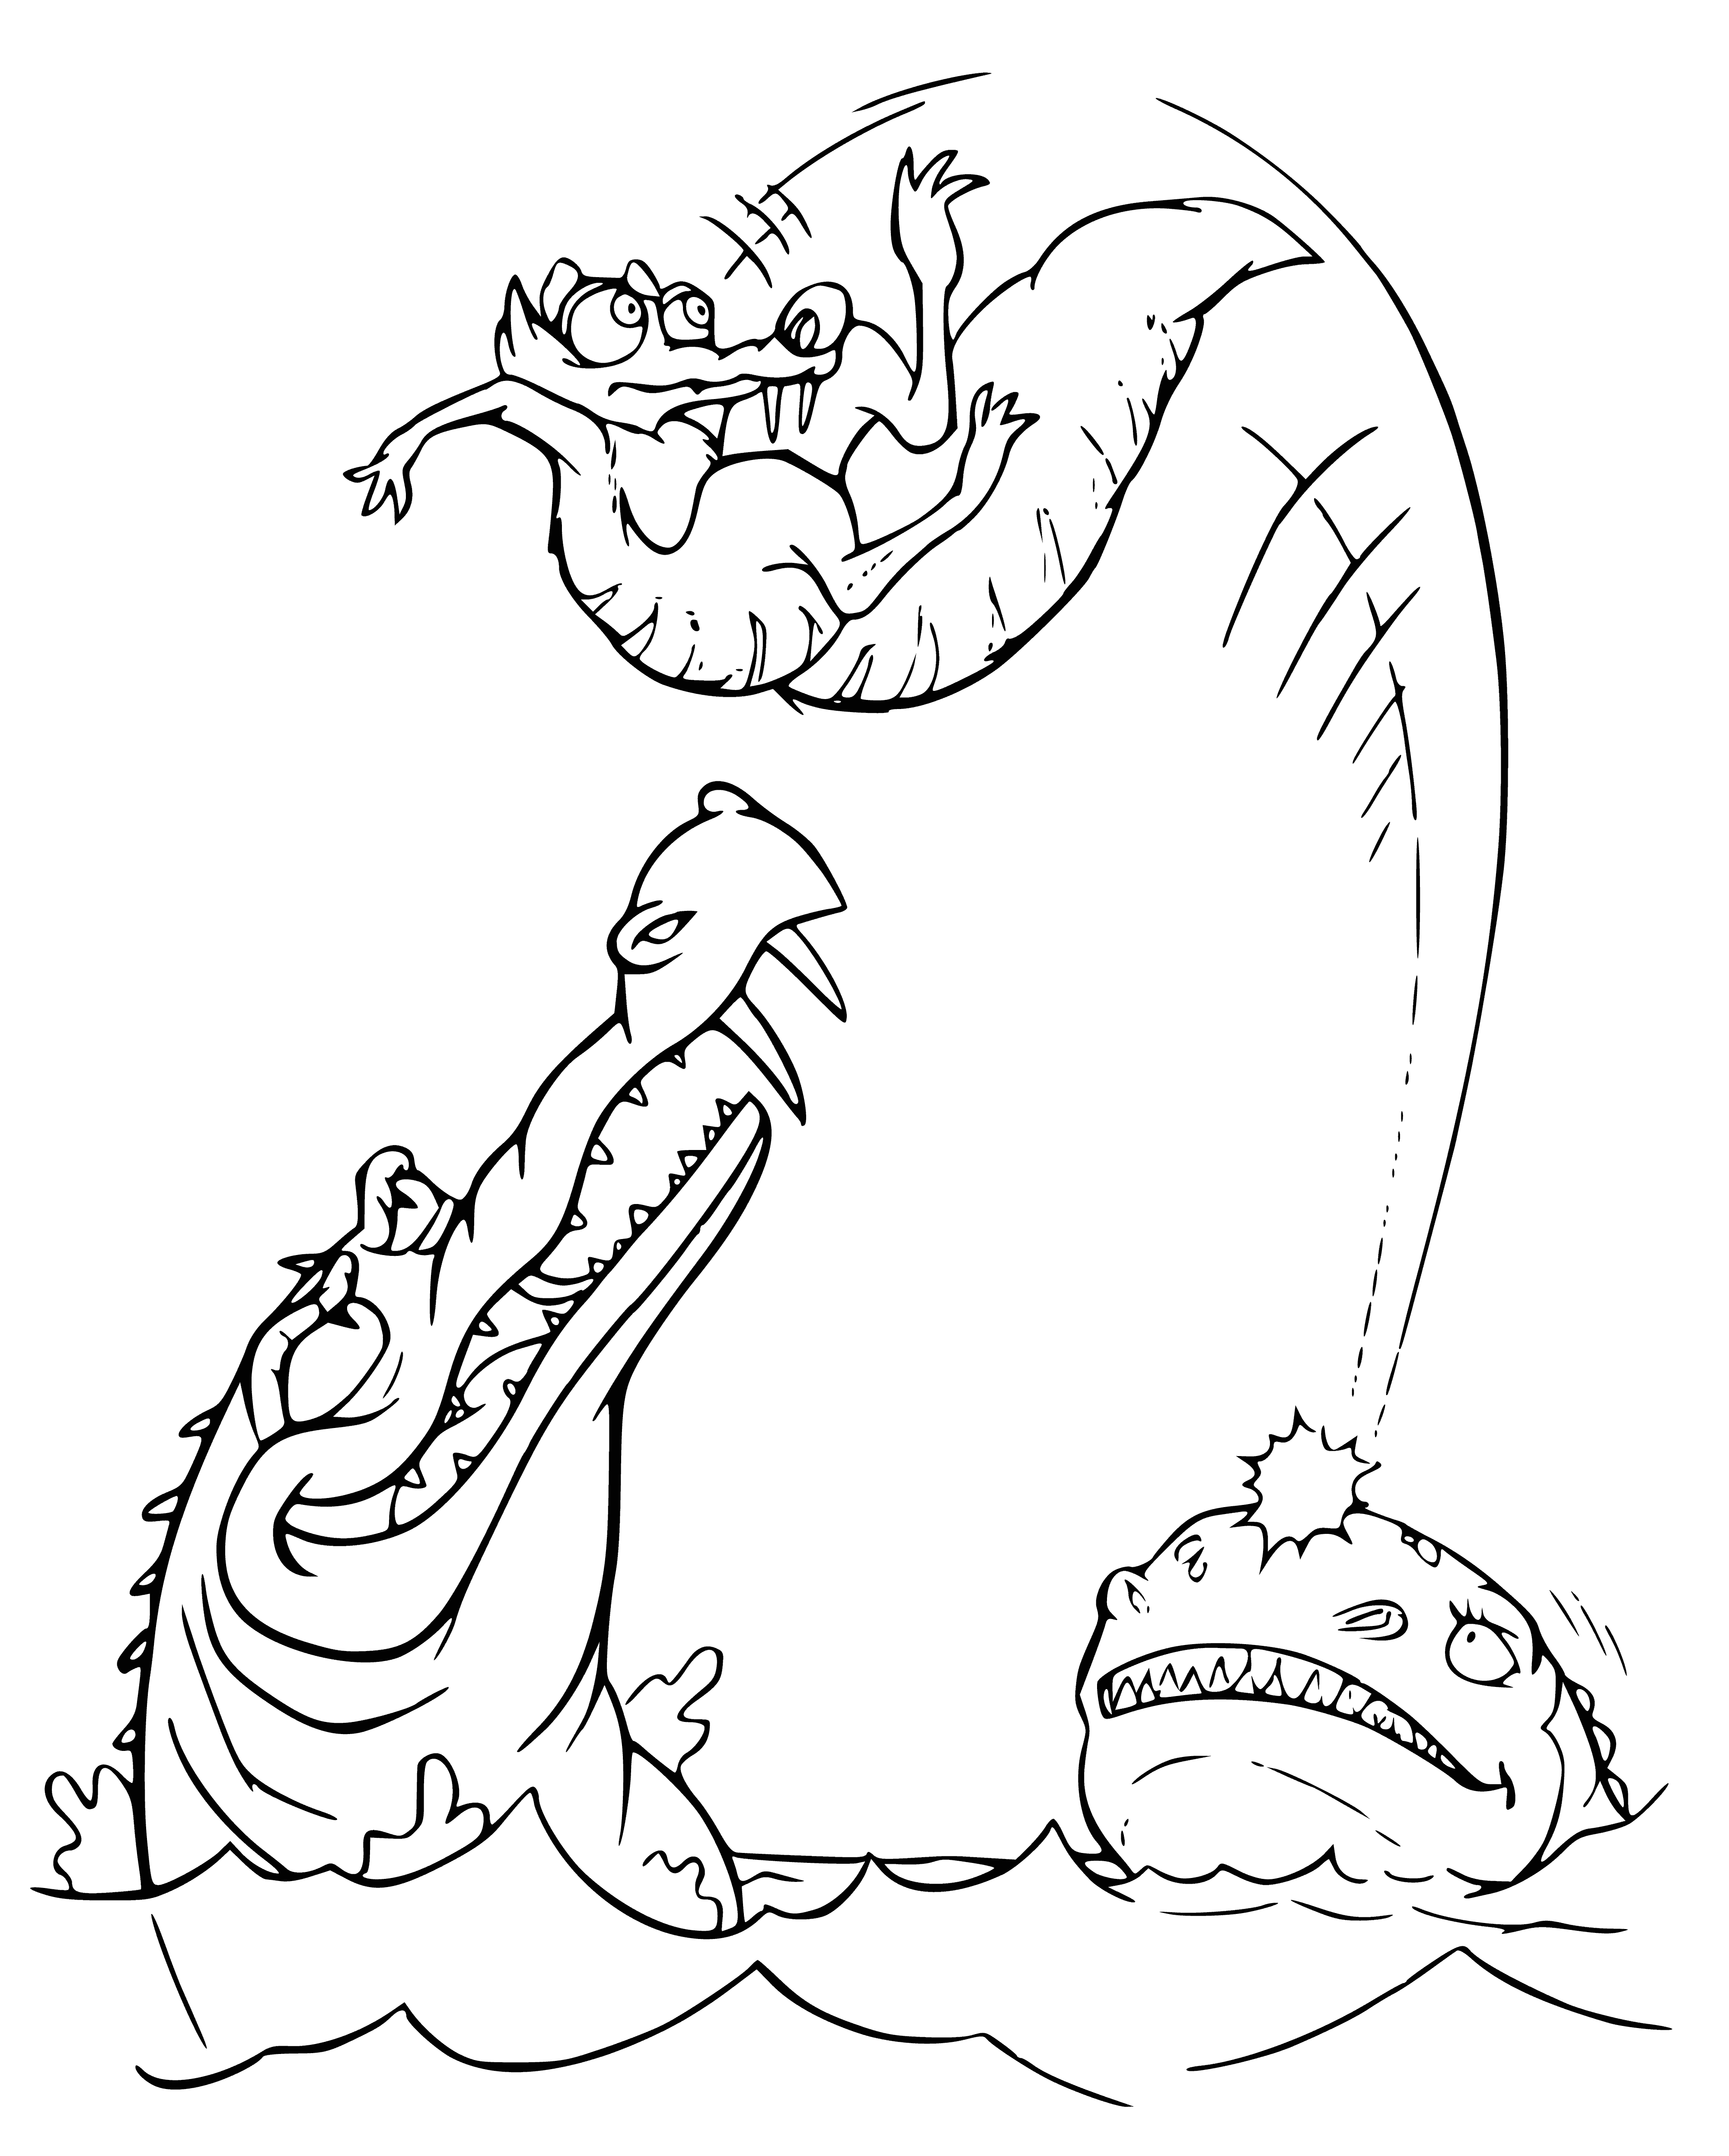 Scrat between reptiles coloring page